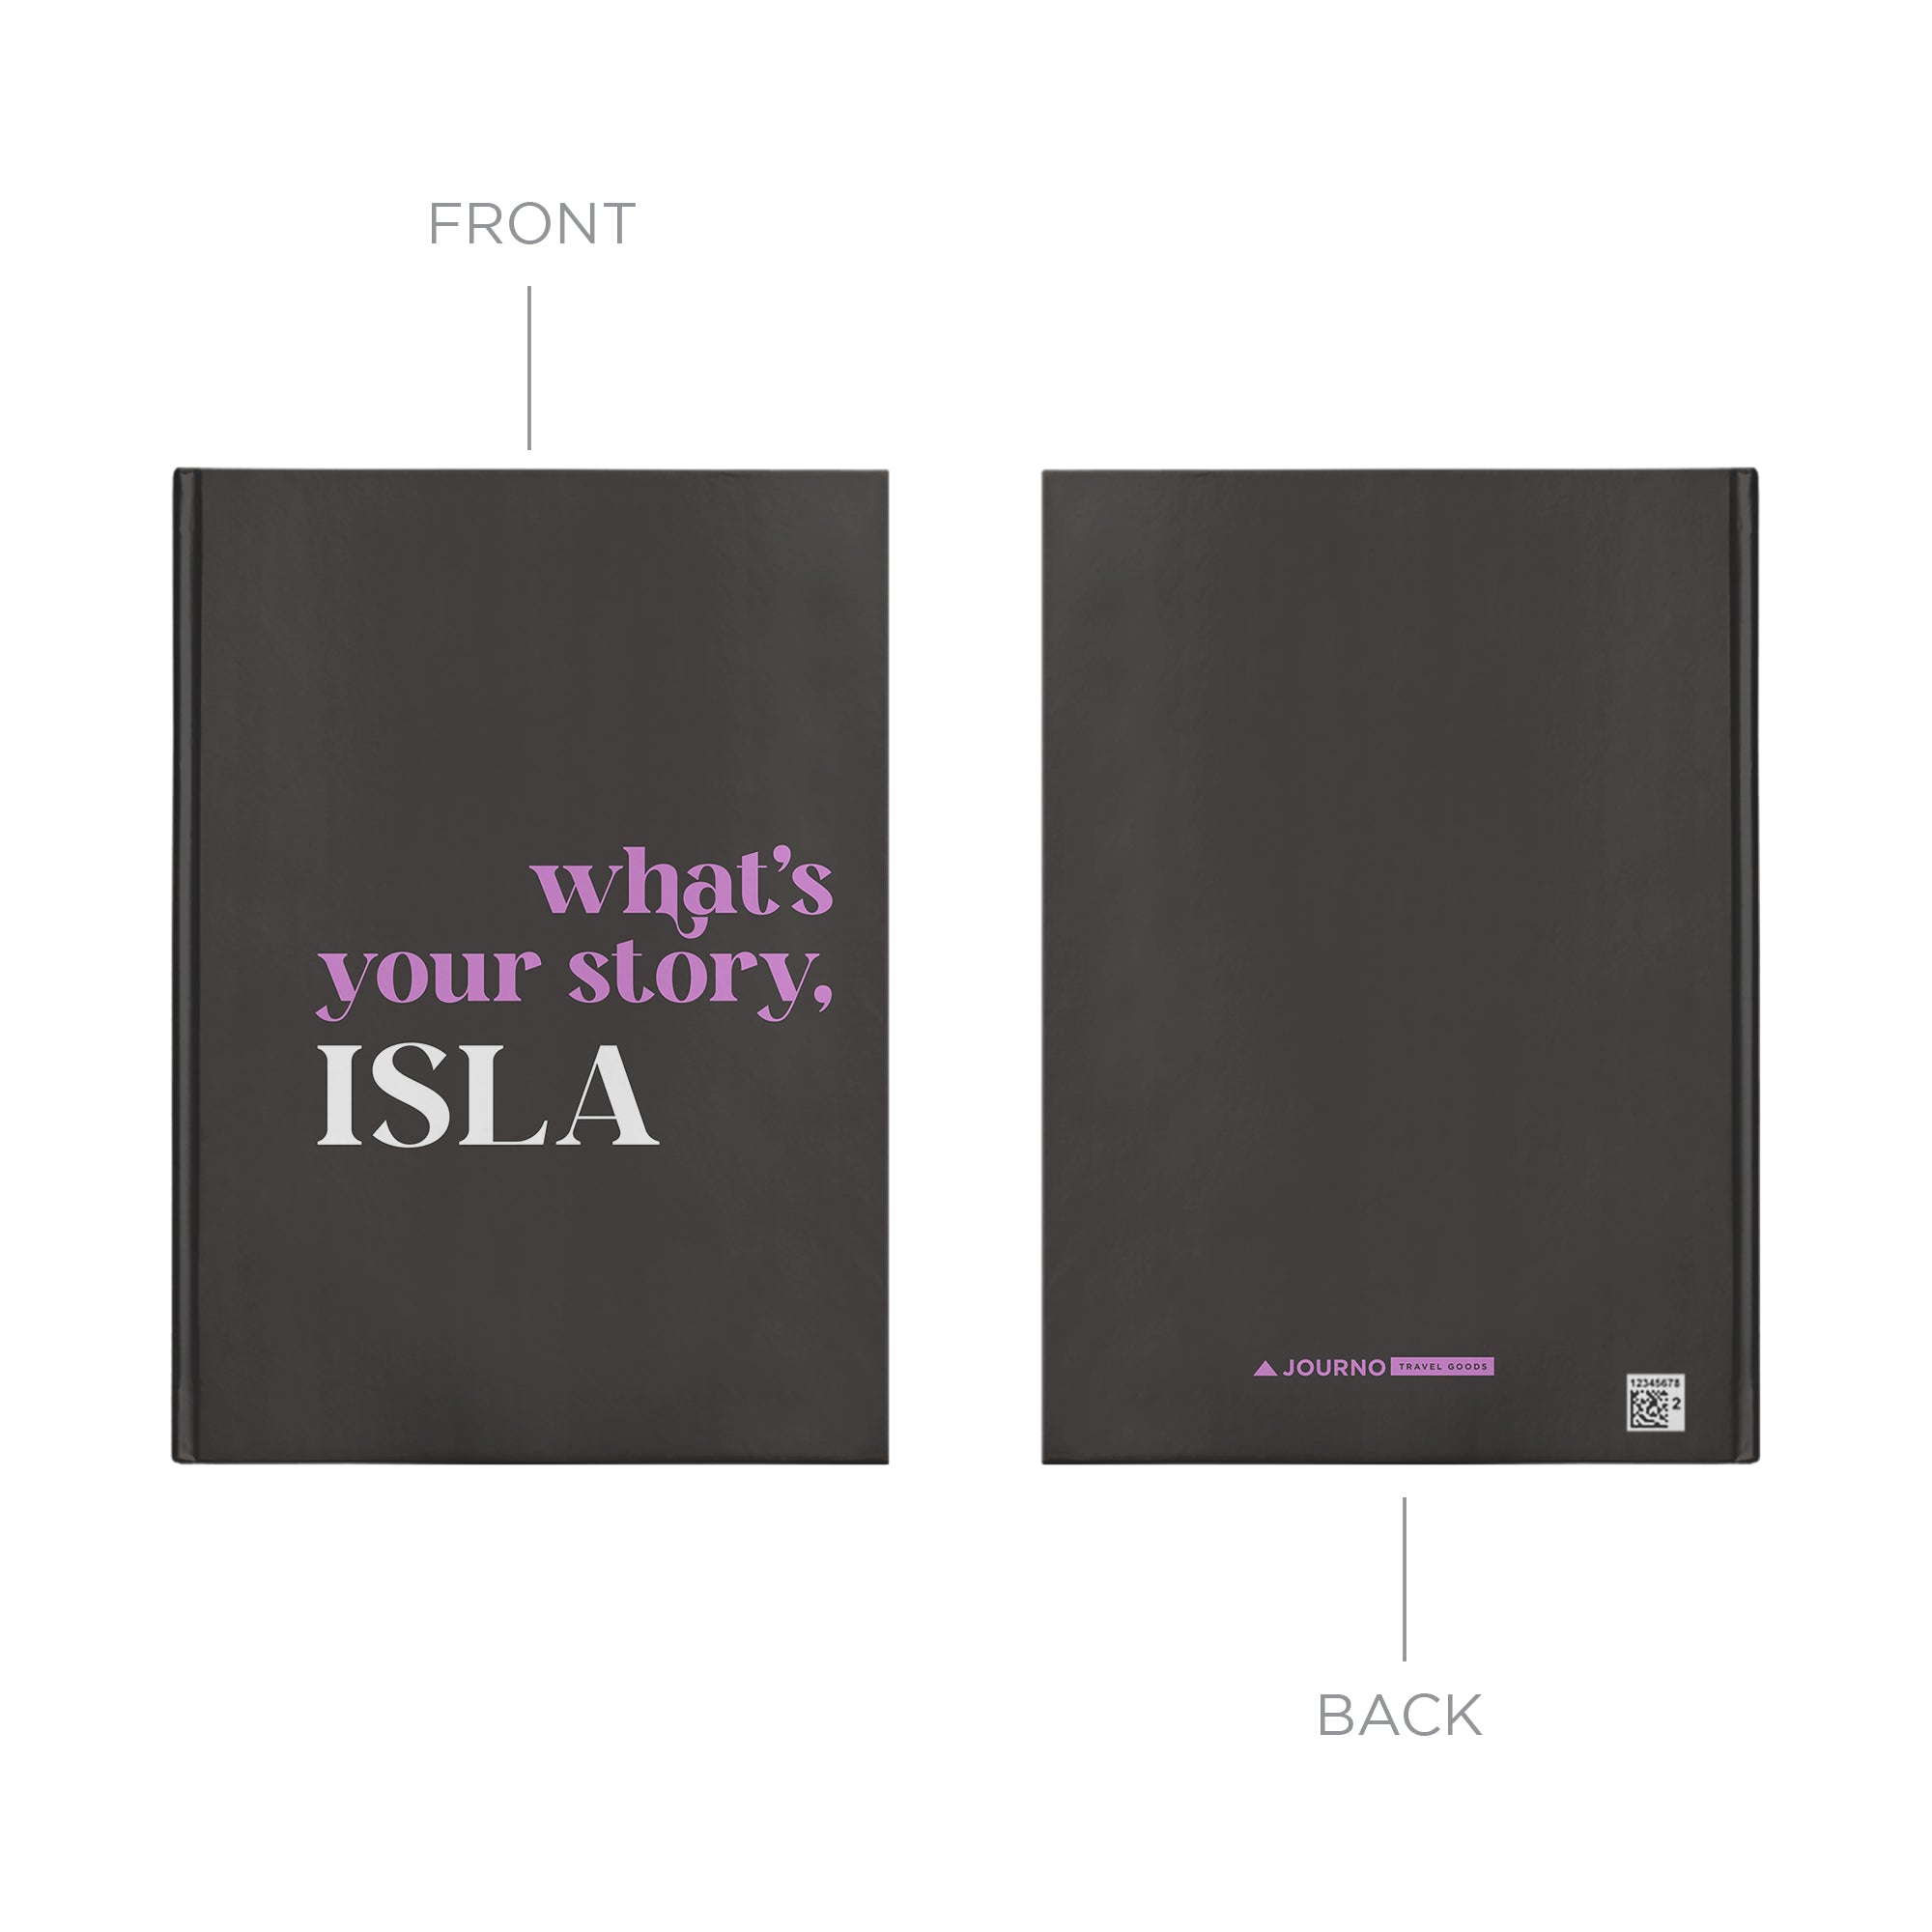 Personalized Hardcover Journal For Family Keepsake